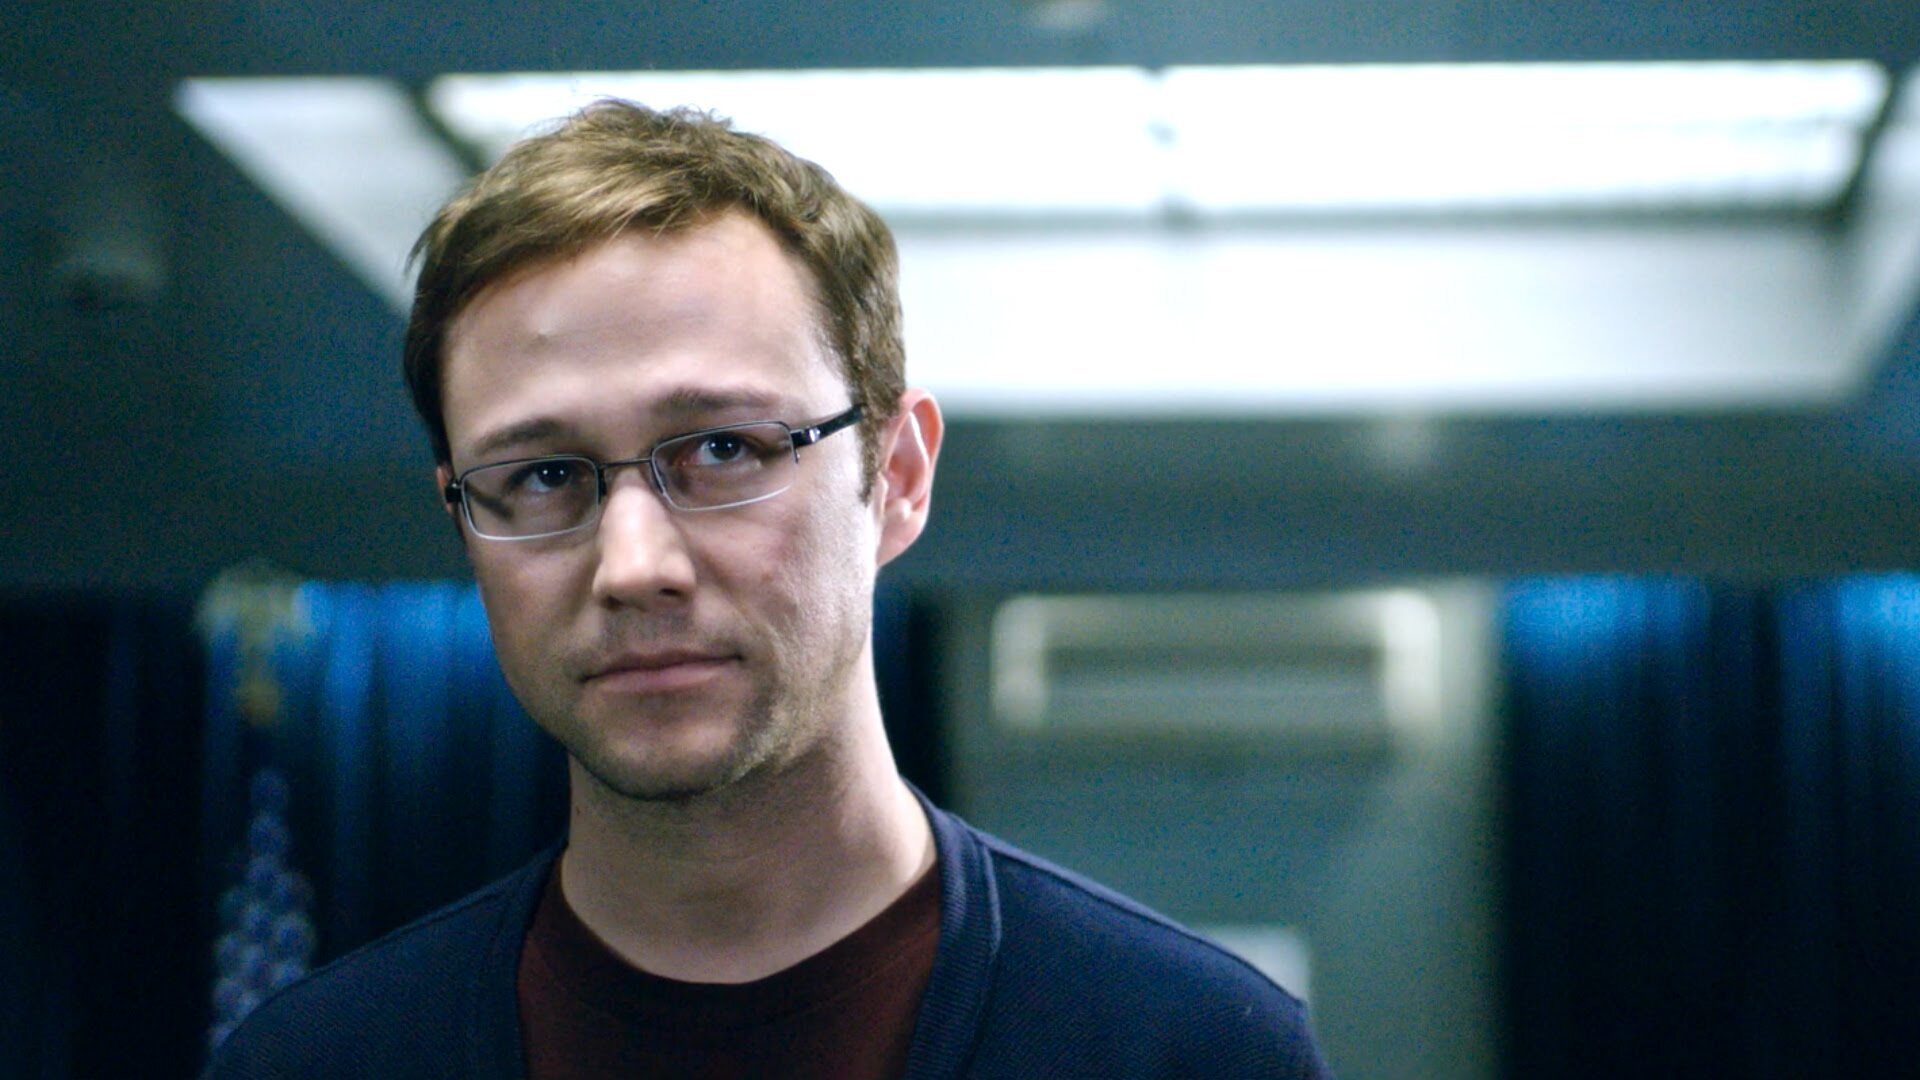 kadr z filmu "Snowden" (2016)